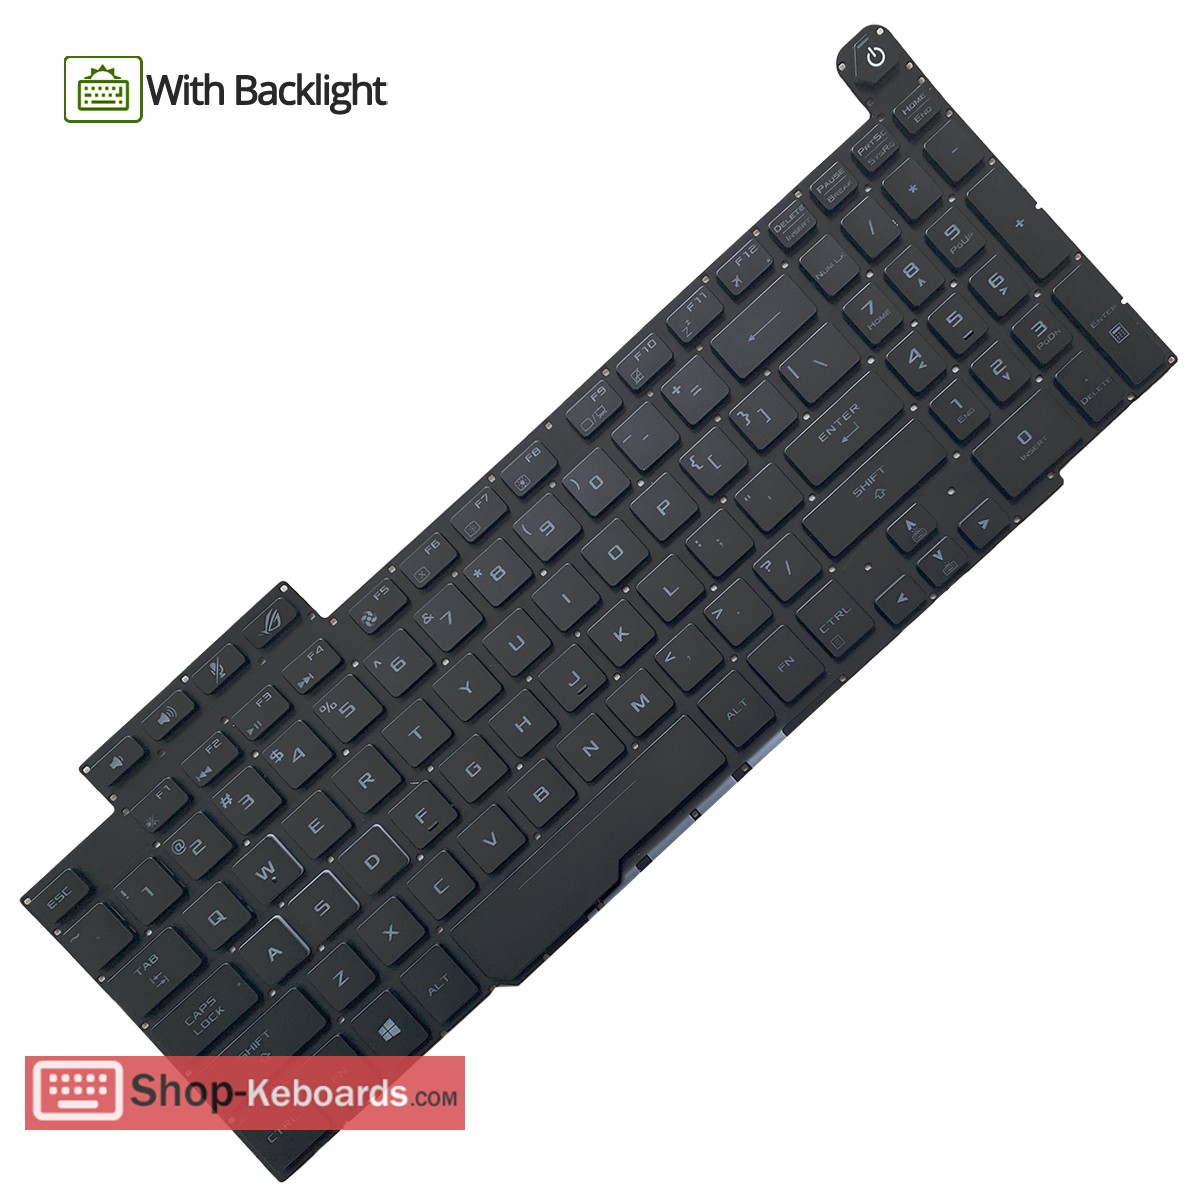 Asus 0KNR0-6612UK00 Keyboard replacement